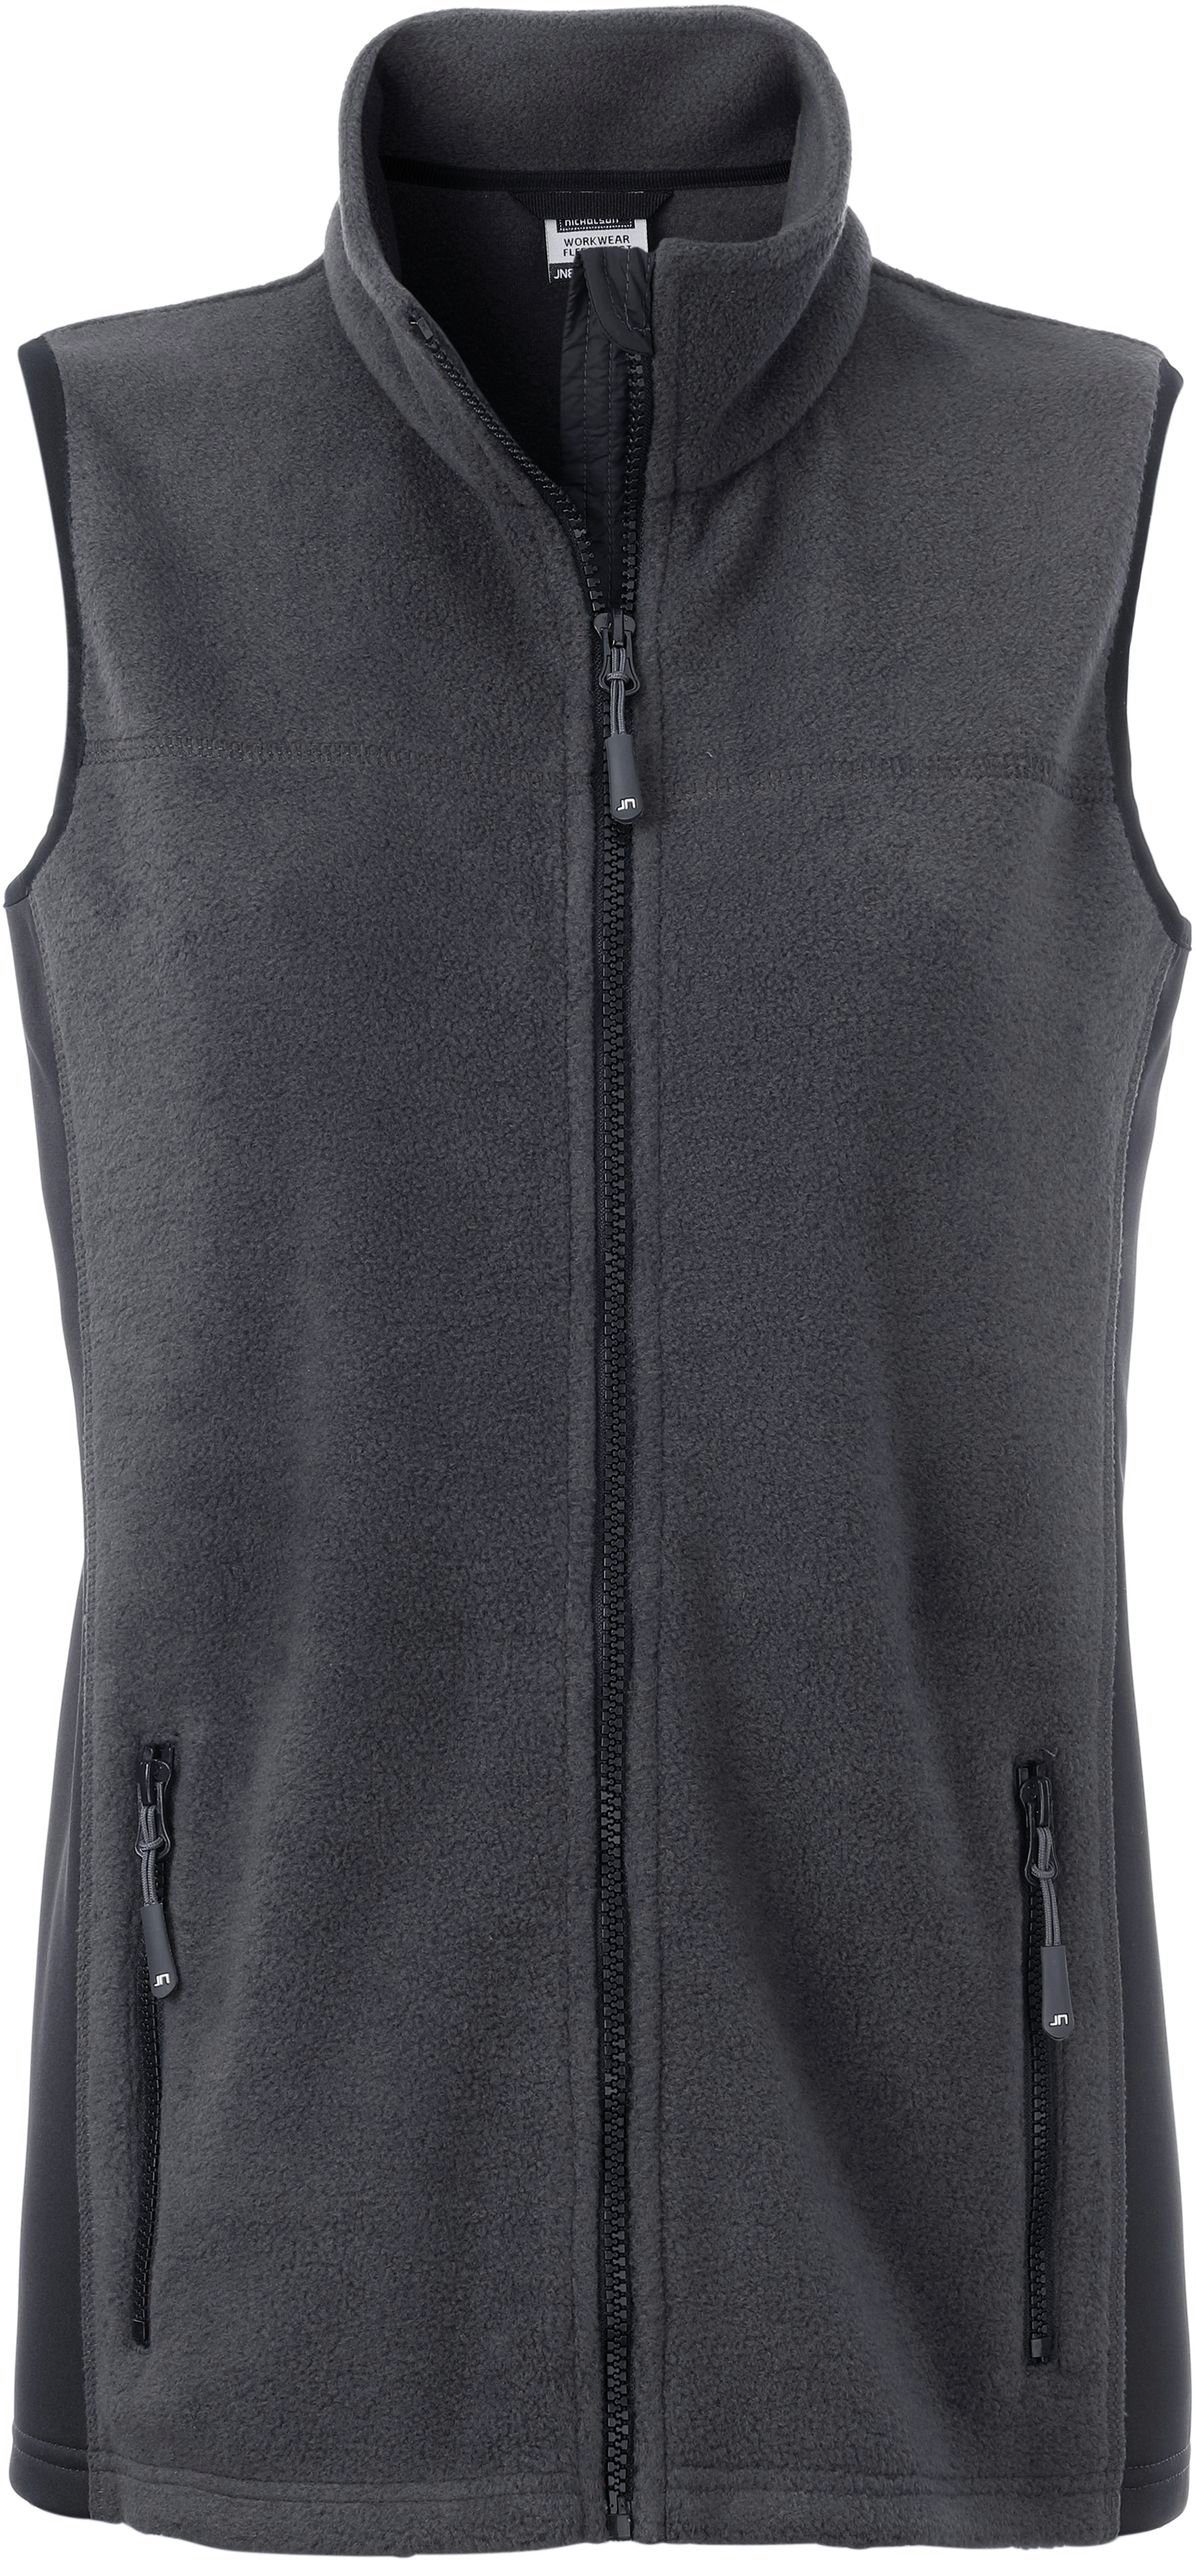 James & Fleece Weste Fleeceweste Nicholson Workwear FaS50855 Gilet carbon/black